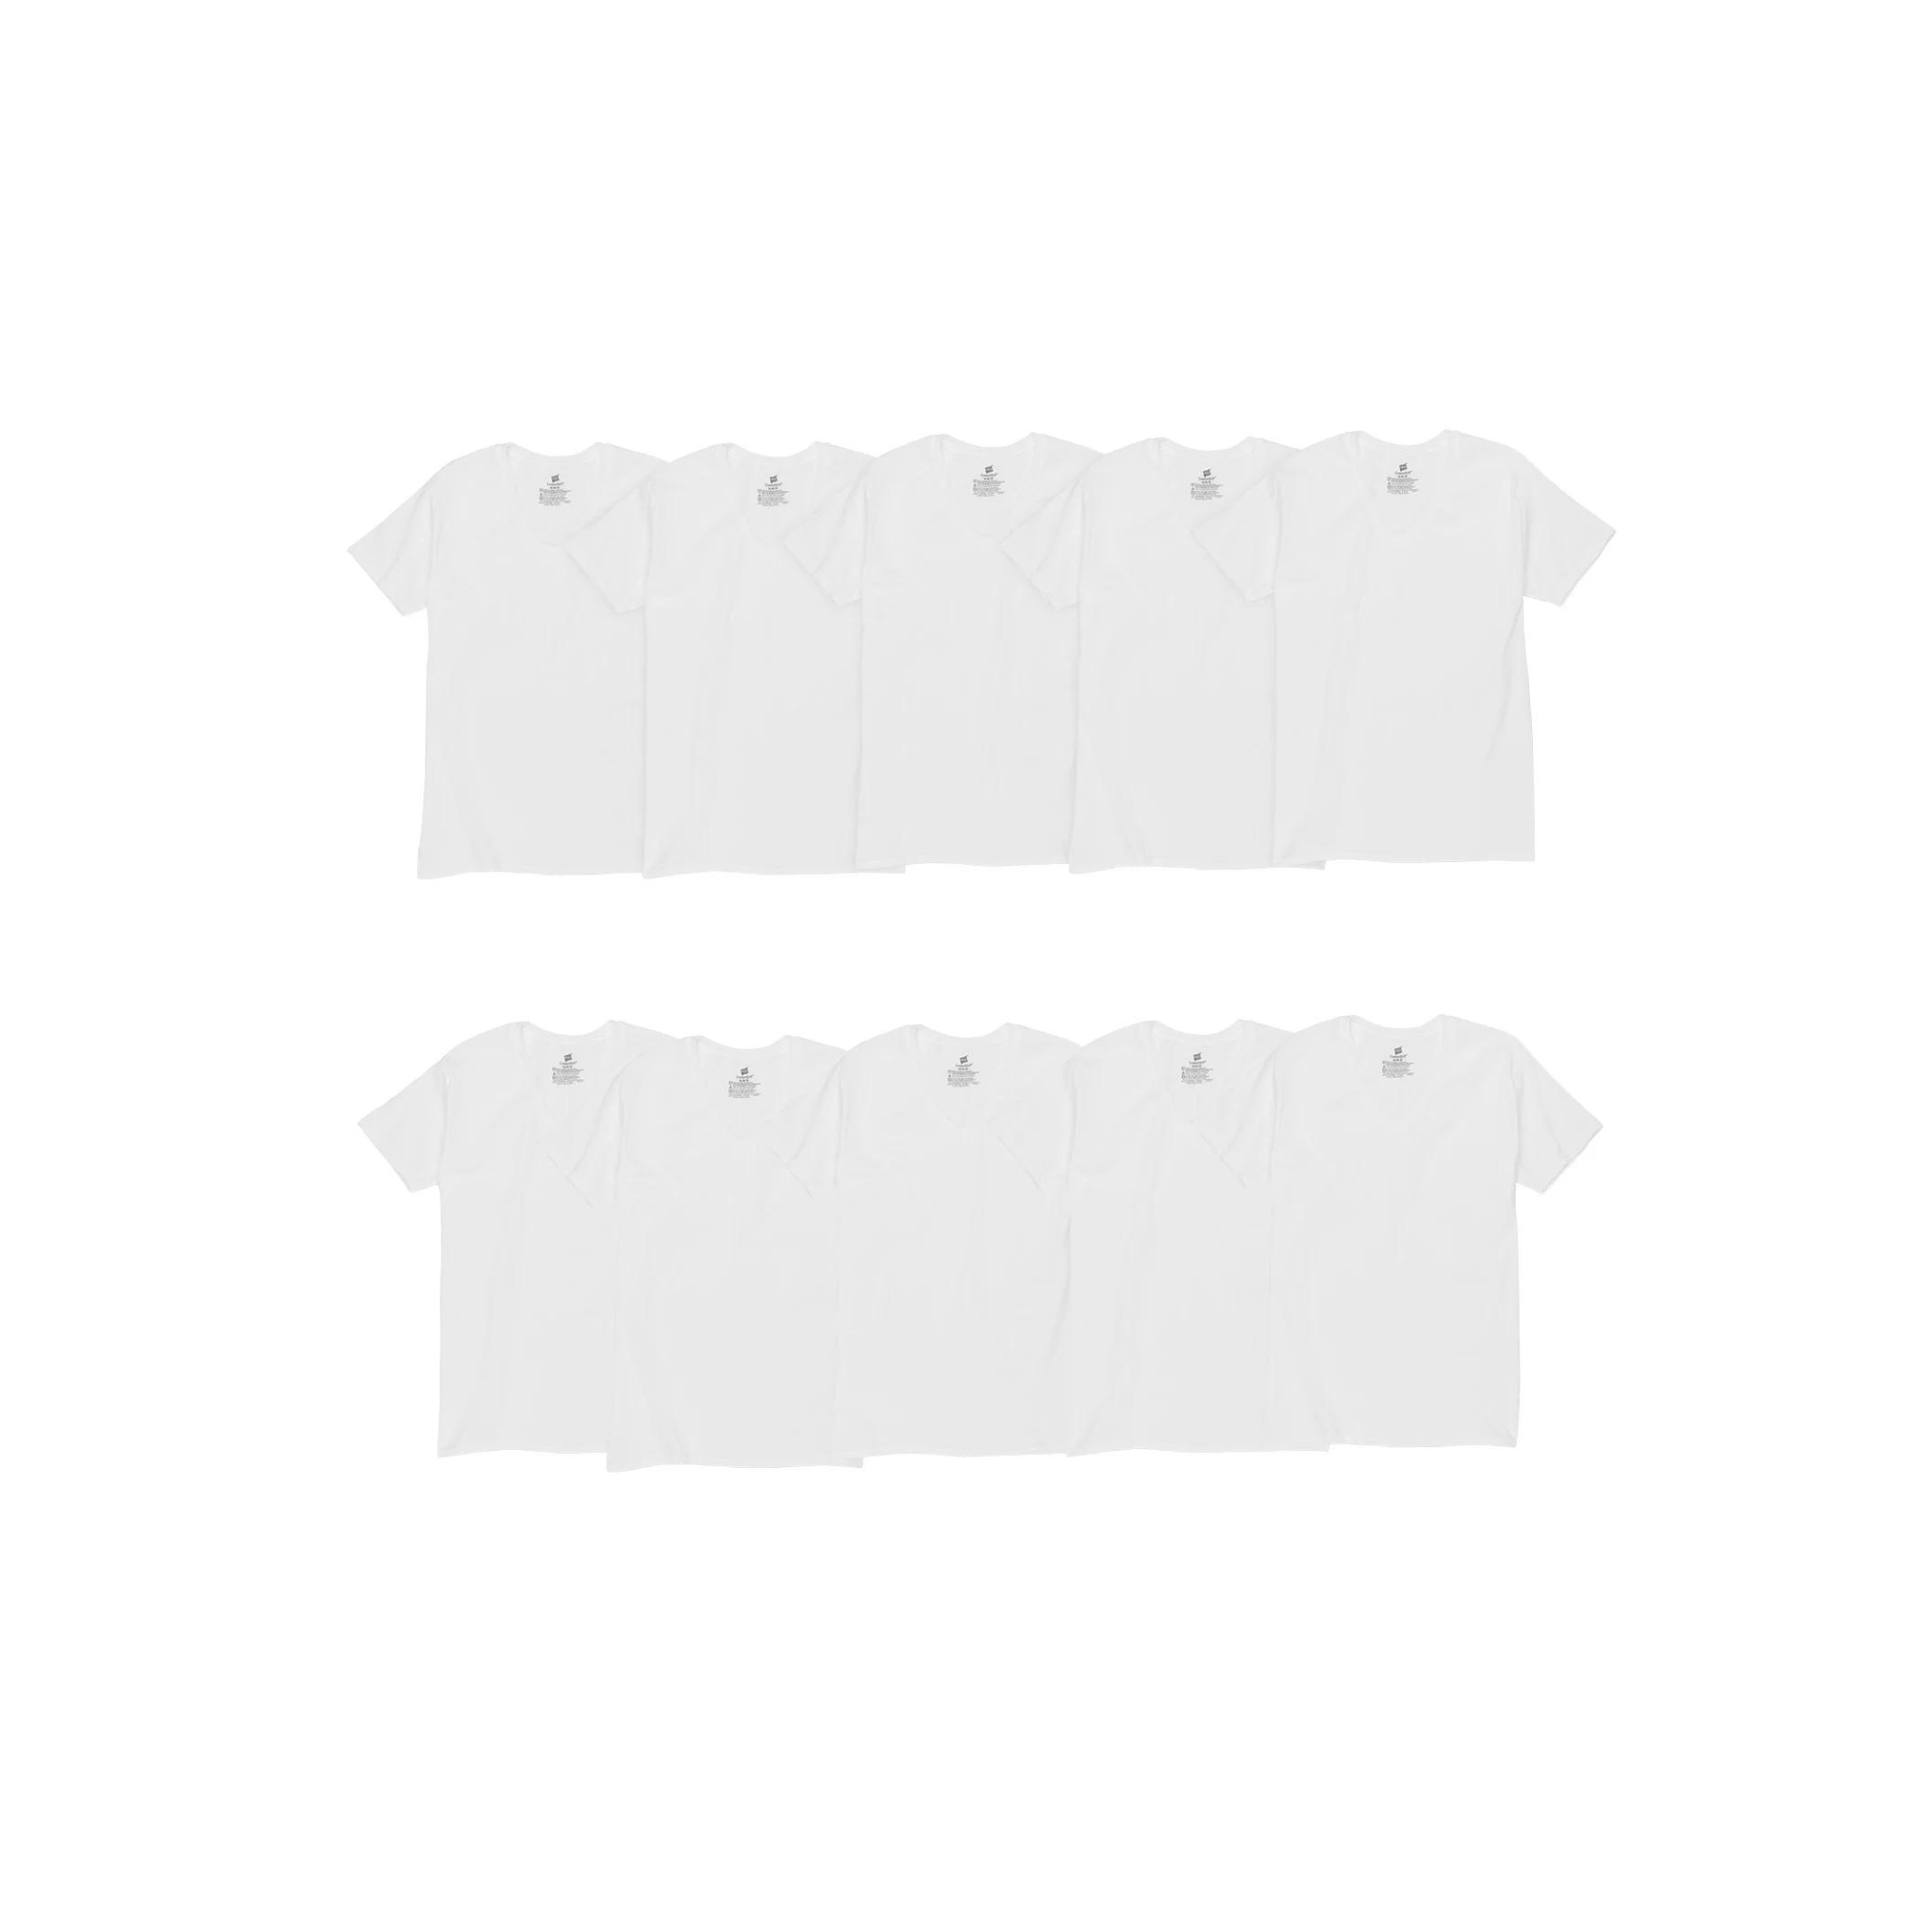 10-Pack Hanes Men's White V-Neck Undershirts